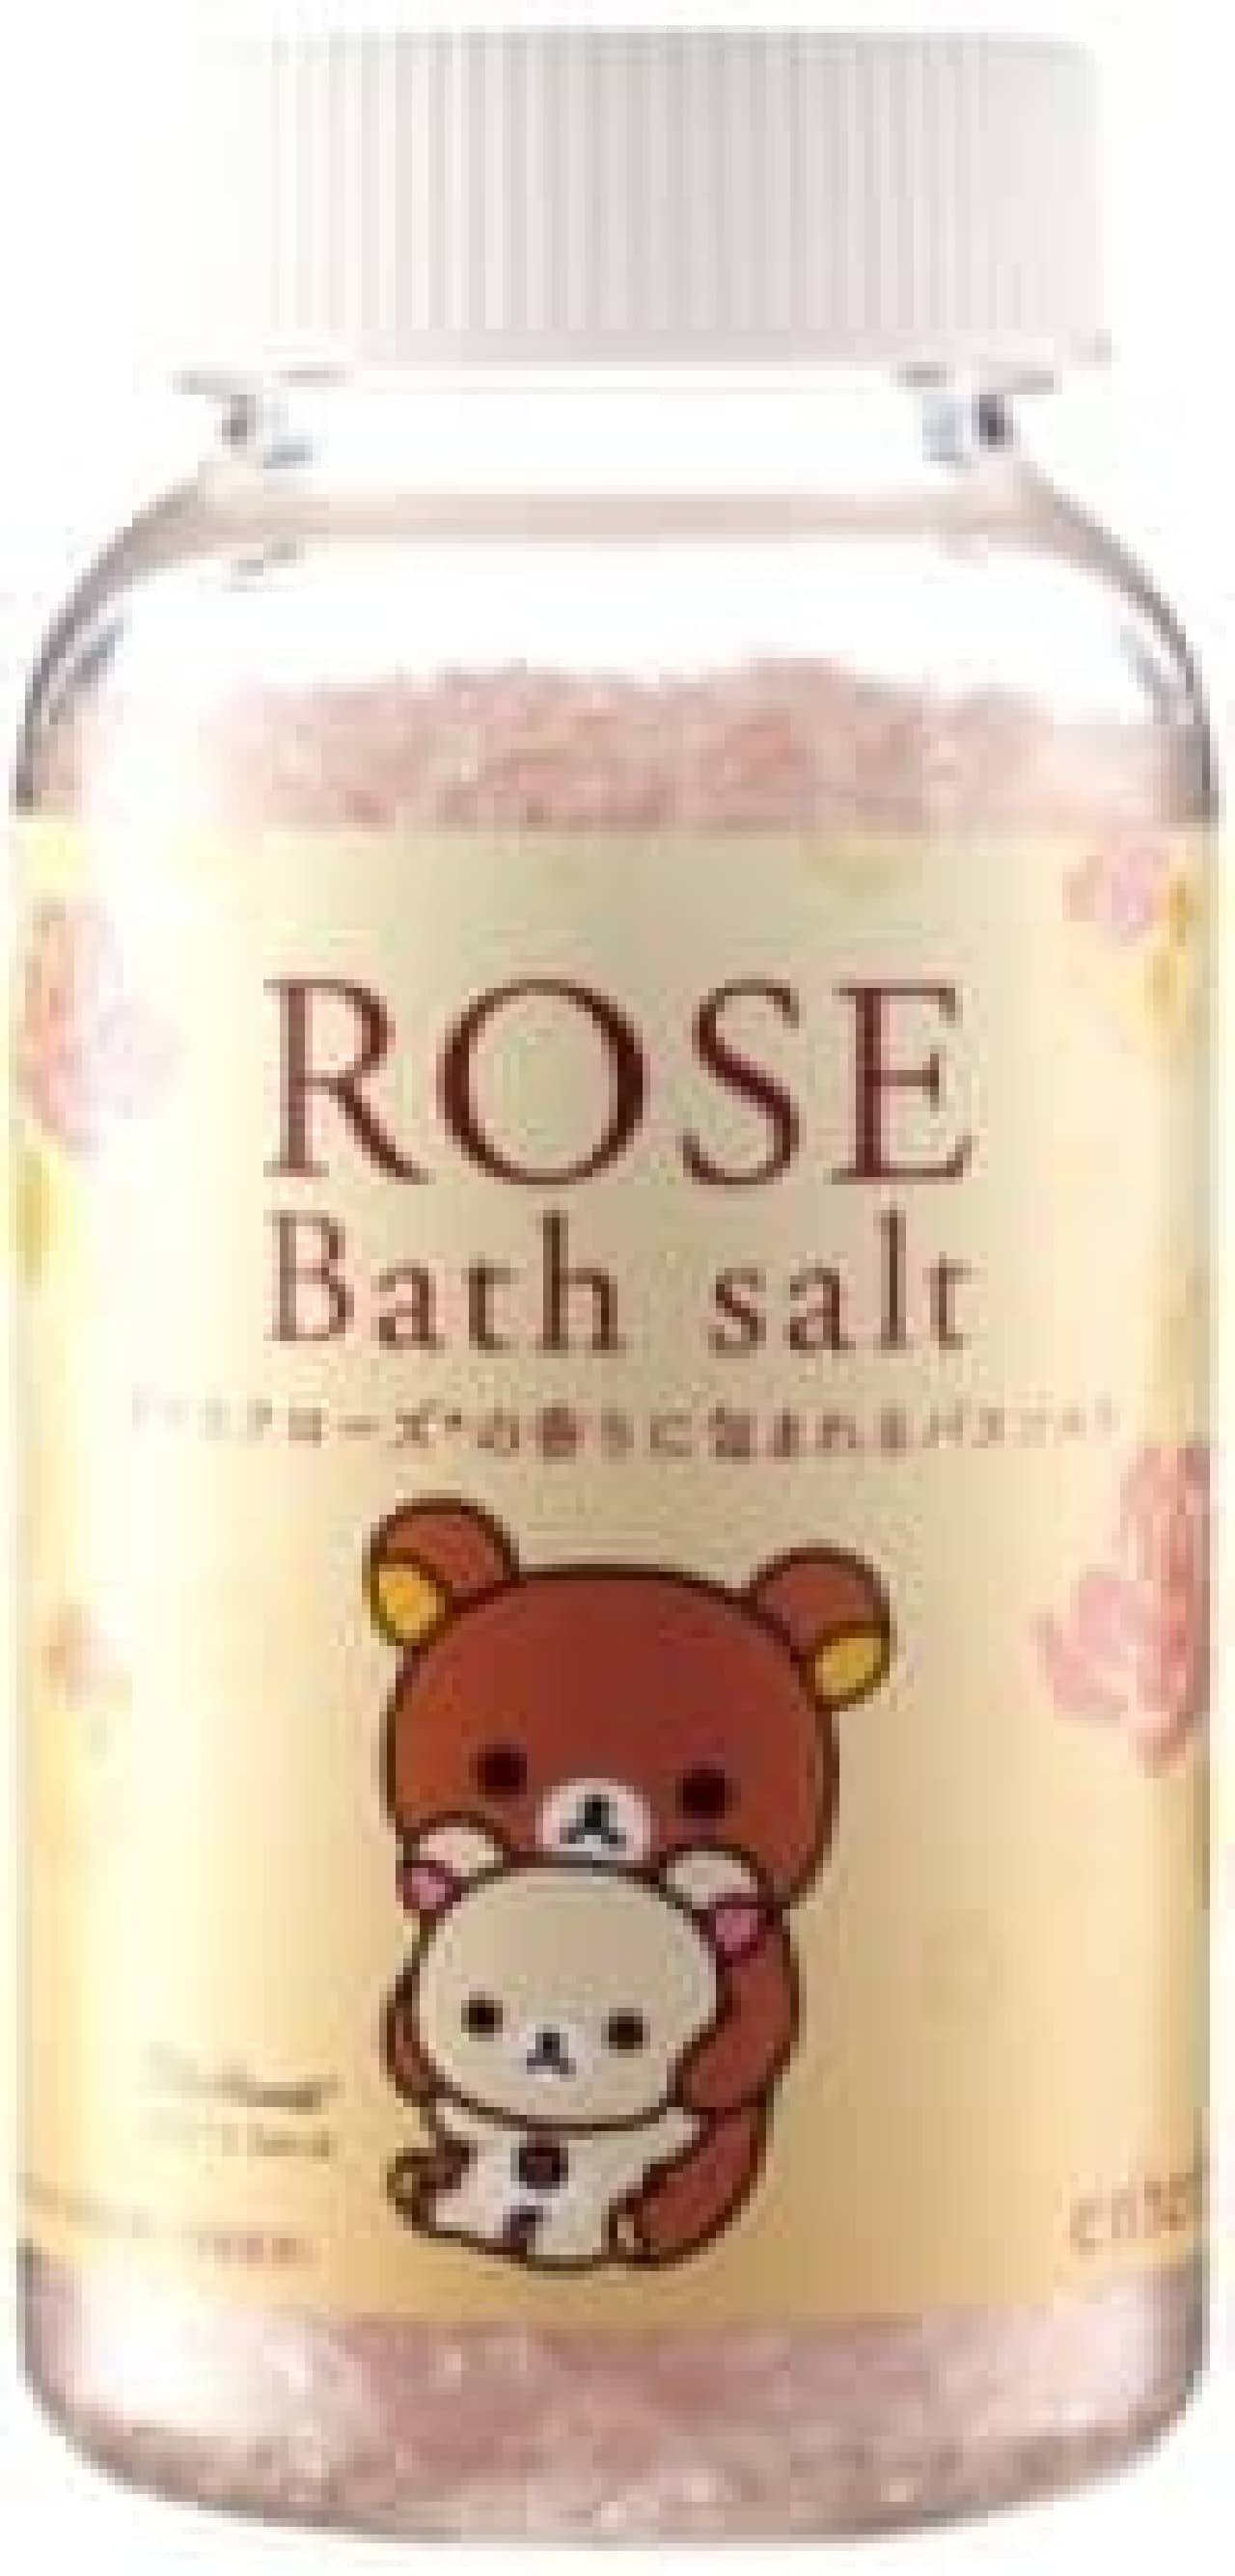 Moisturize with bath salts